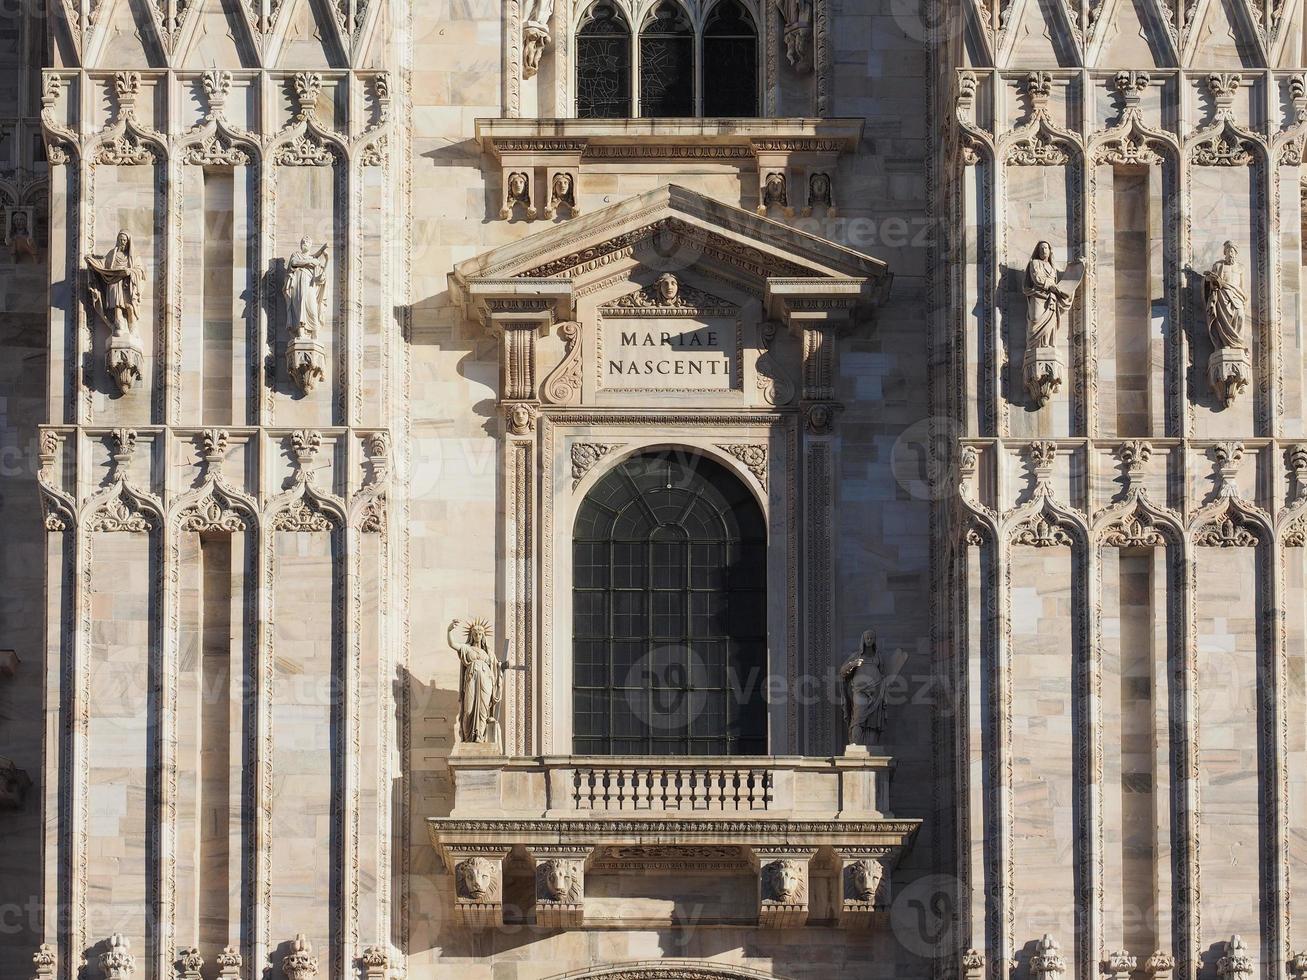 Duomo di Milano Milan Cathedral photo